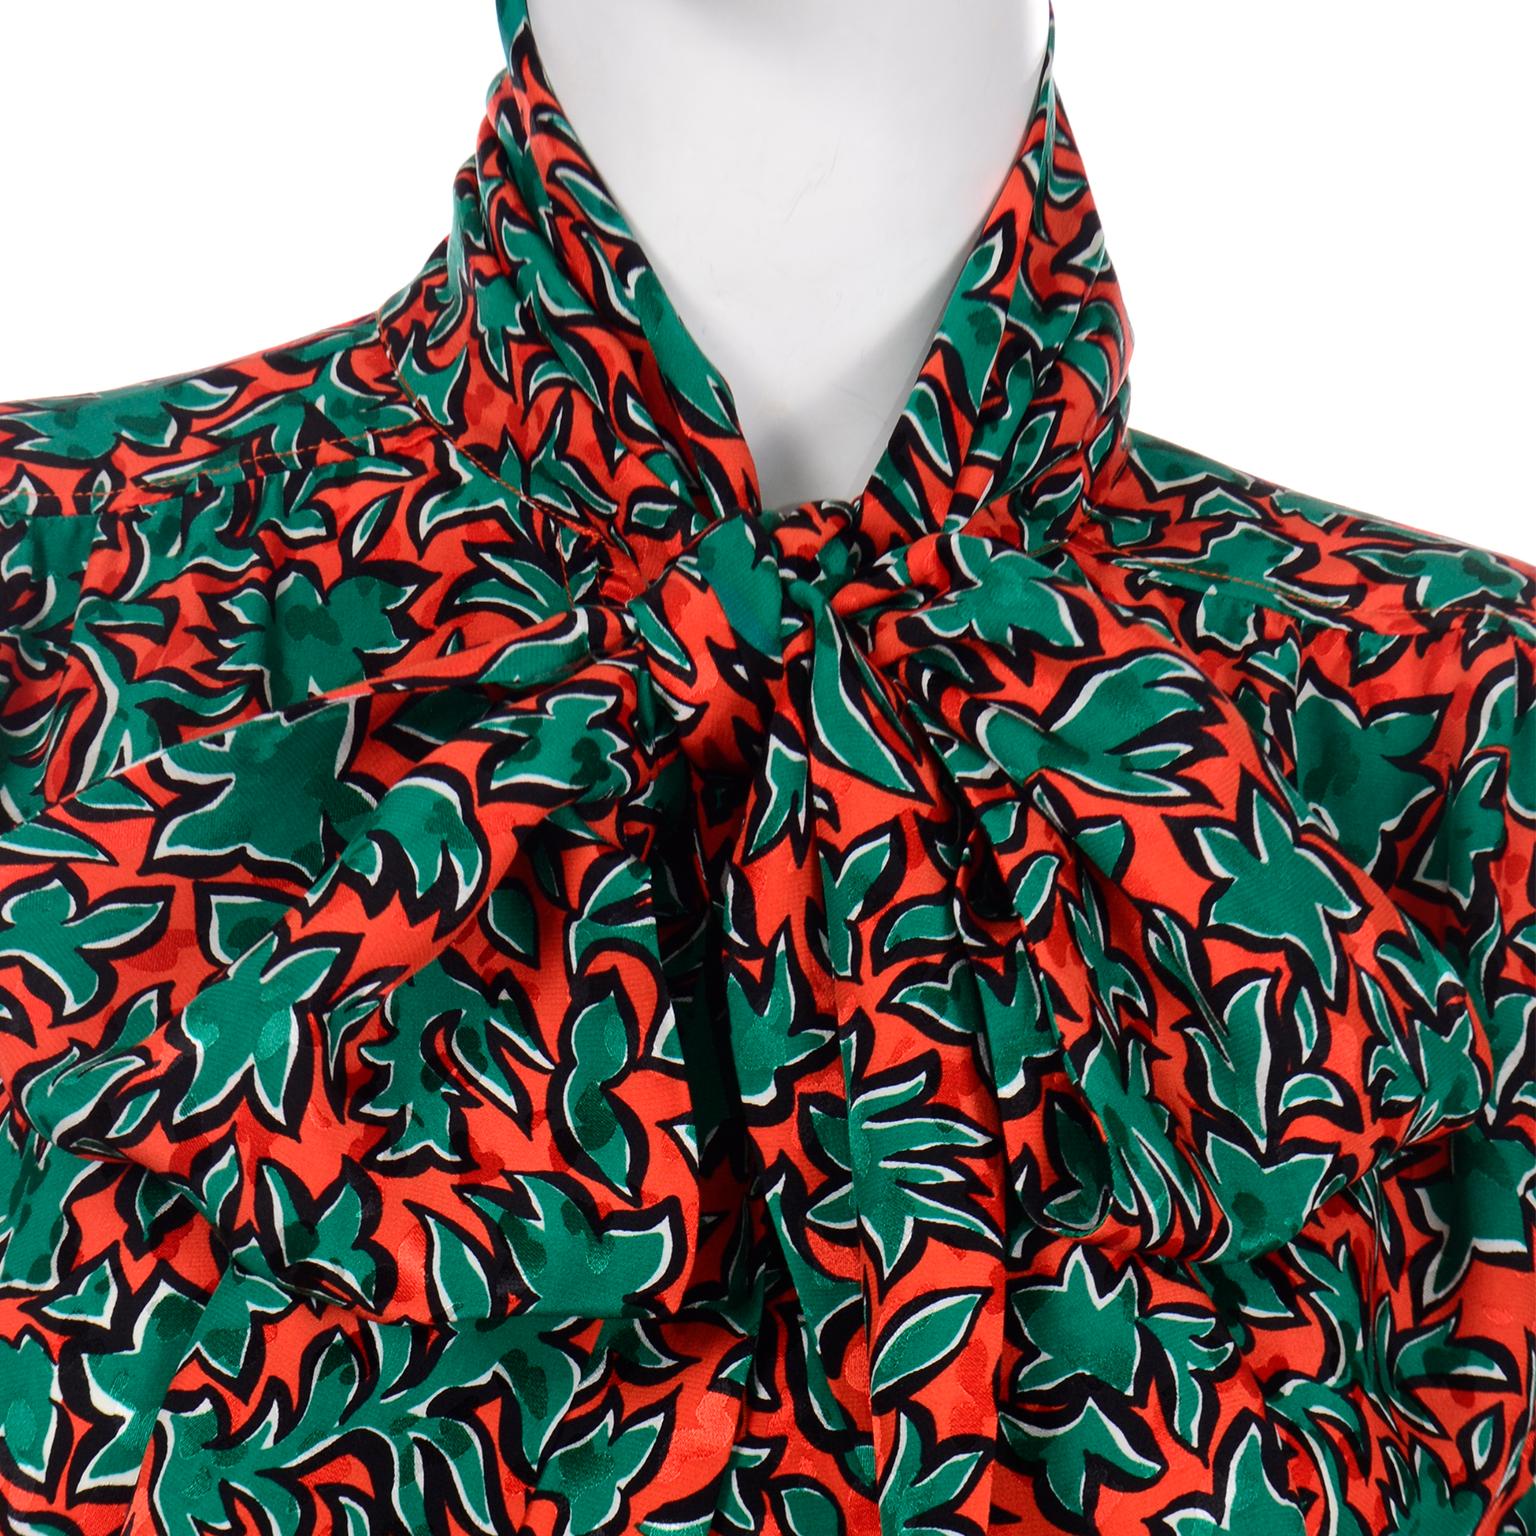 Yves Saint Laurent Orange & Green Leaf Print Blouse With Bow Sash For Sale 2